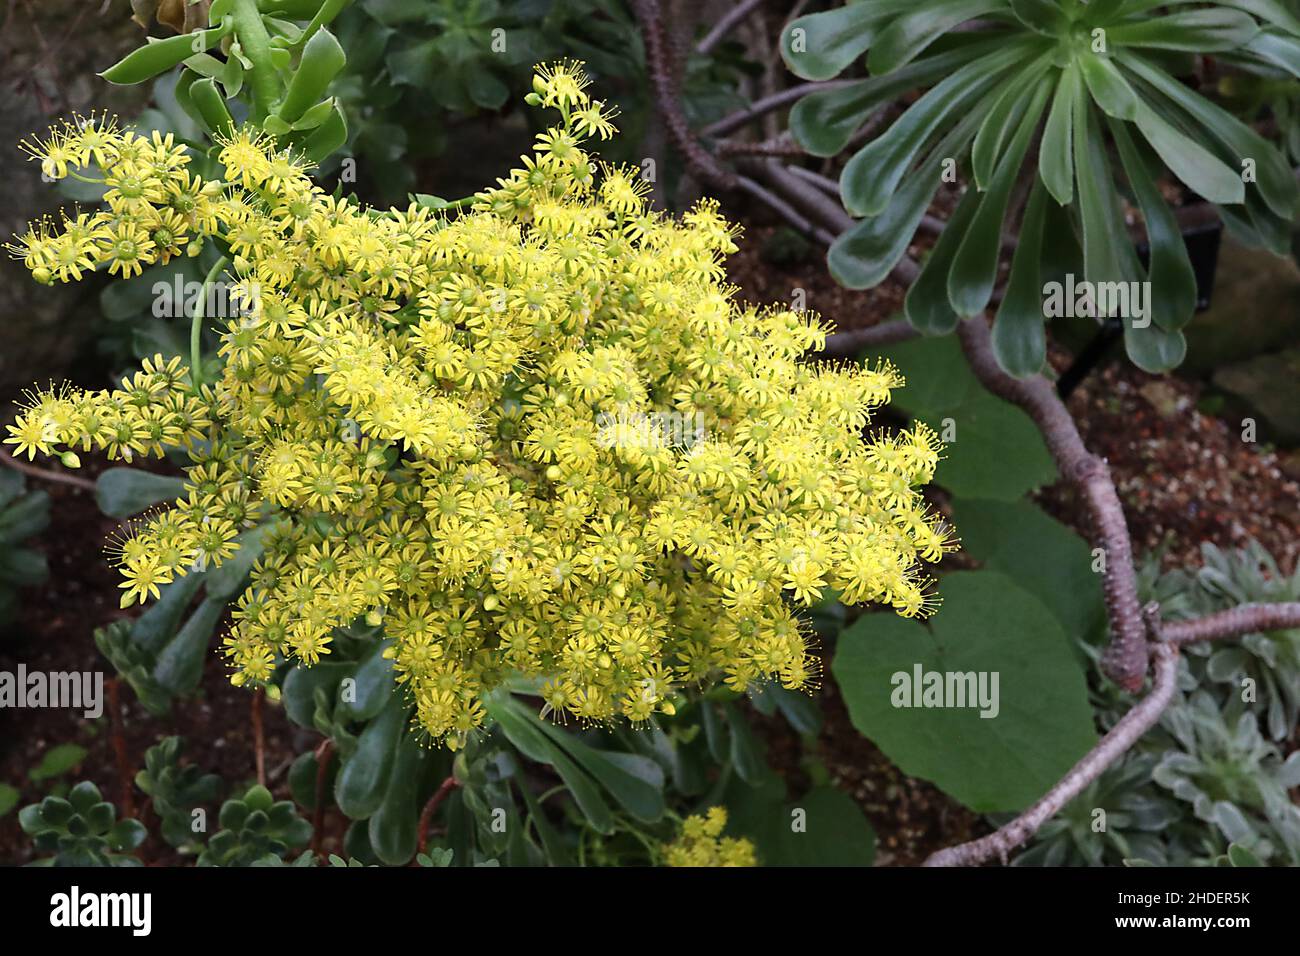 Aeonium arboreum tree aeonium – dense clusters of yellow daisy-like flowers, glossy spatulate leaves,  January, England, UK Stock Photo